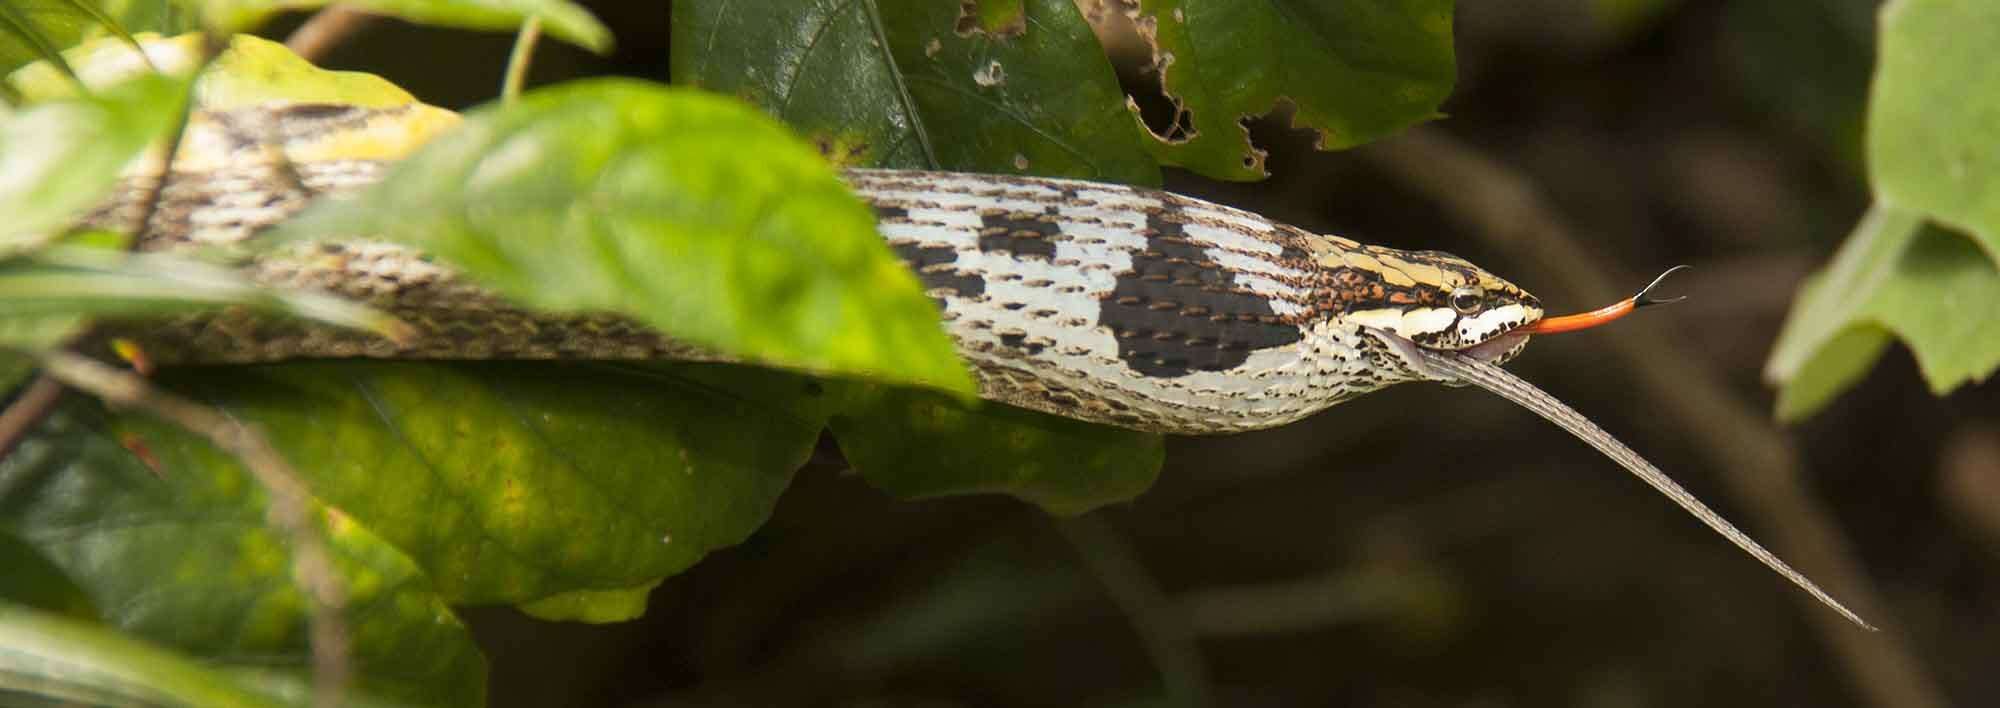 Image de Thelotornis capensis capensis A. Smith 1849